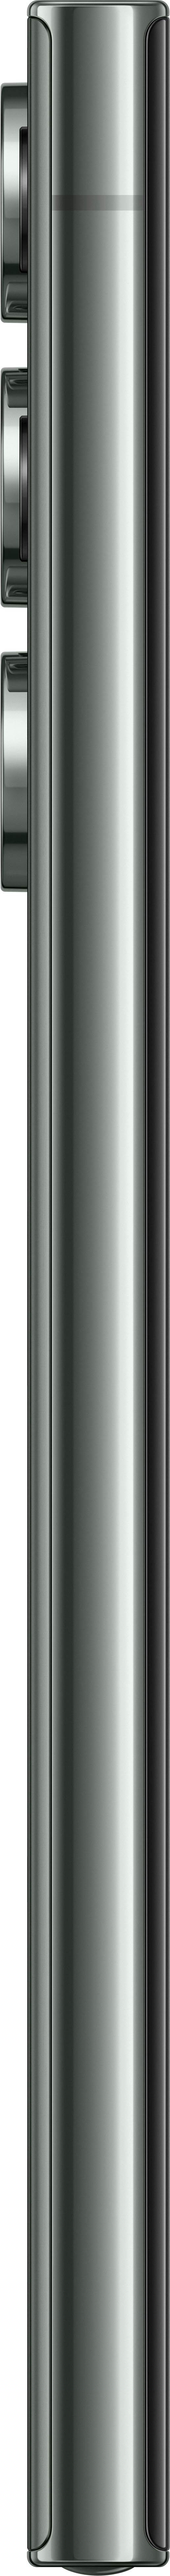 SM-S911UZGEXAA, Galaxy S23 256GB (Unlocked) Green